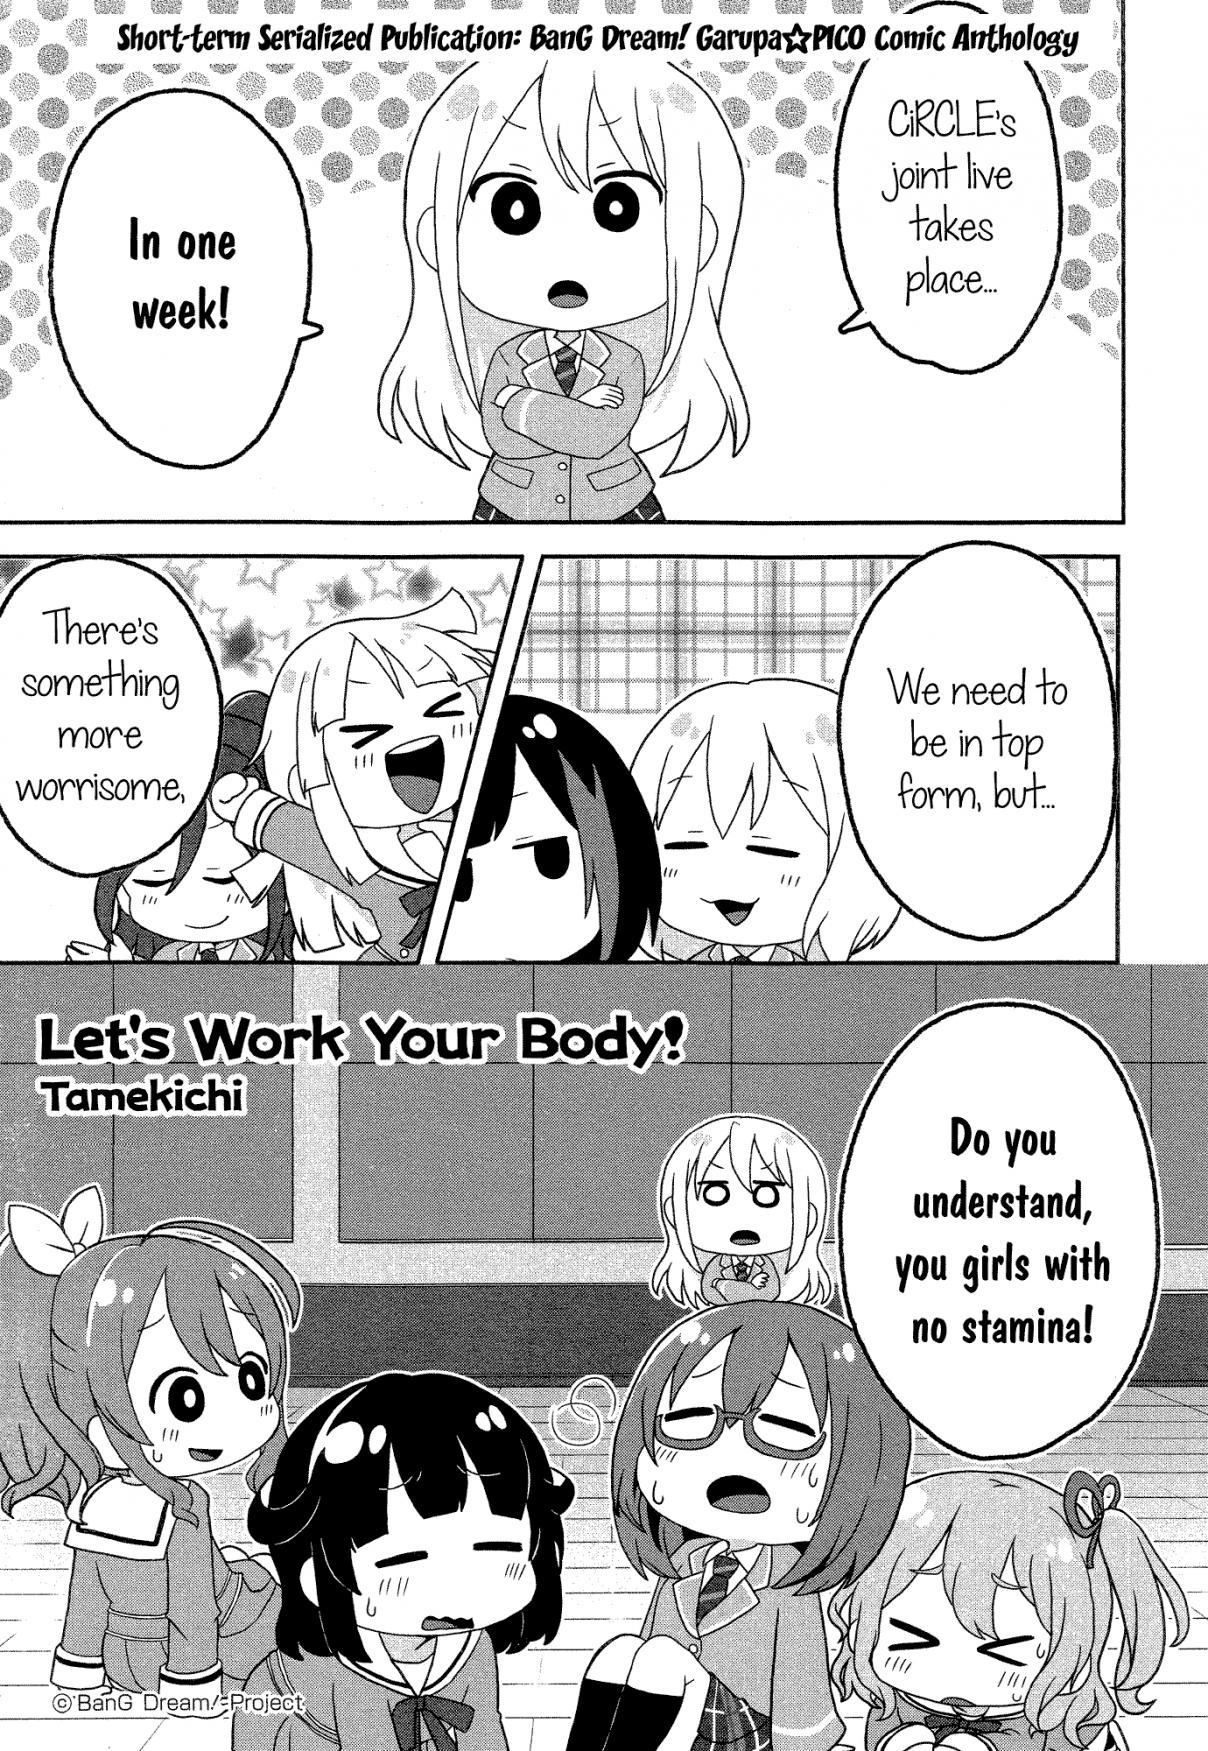 BanG Dream! Garupa☆PICO Comic Anthology Ch. 17 Let's Work Your Body